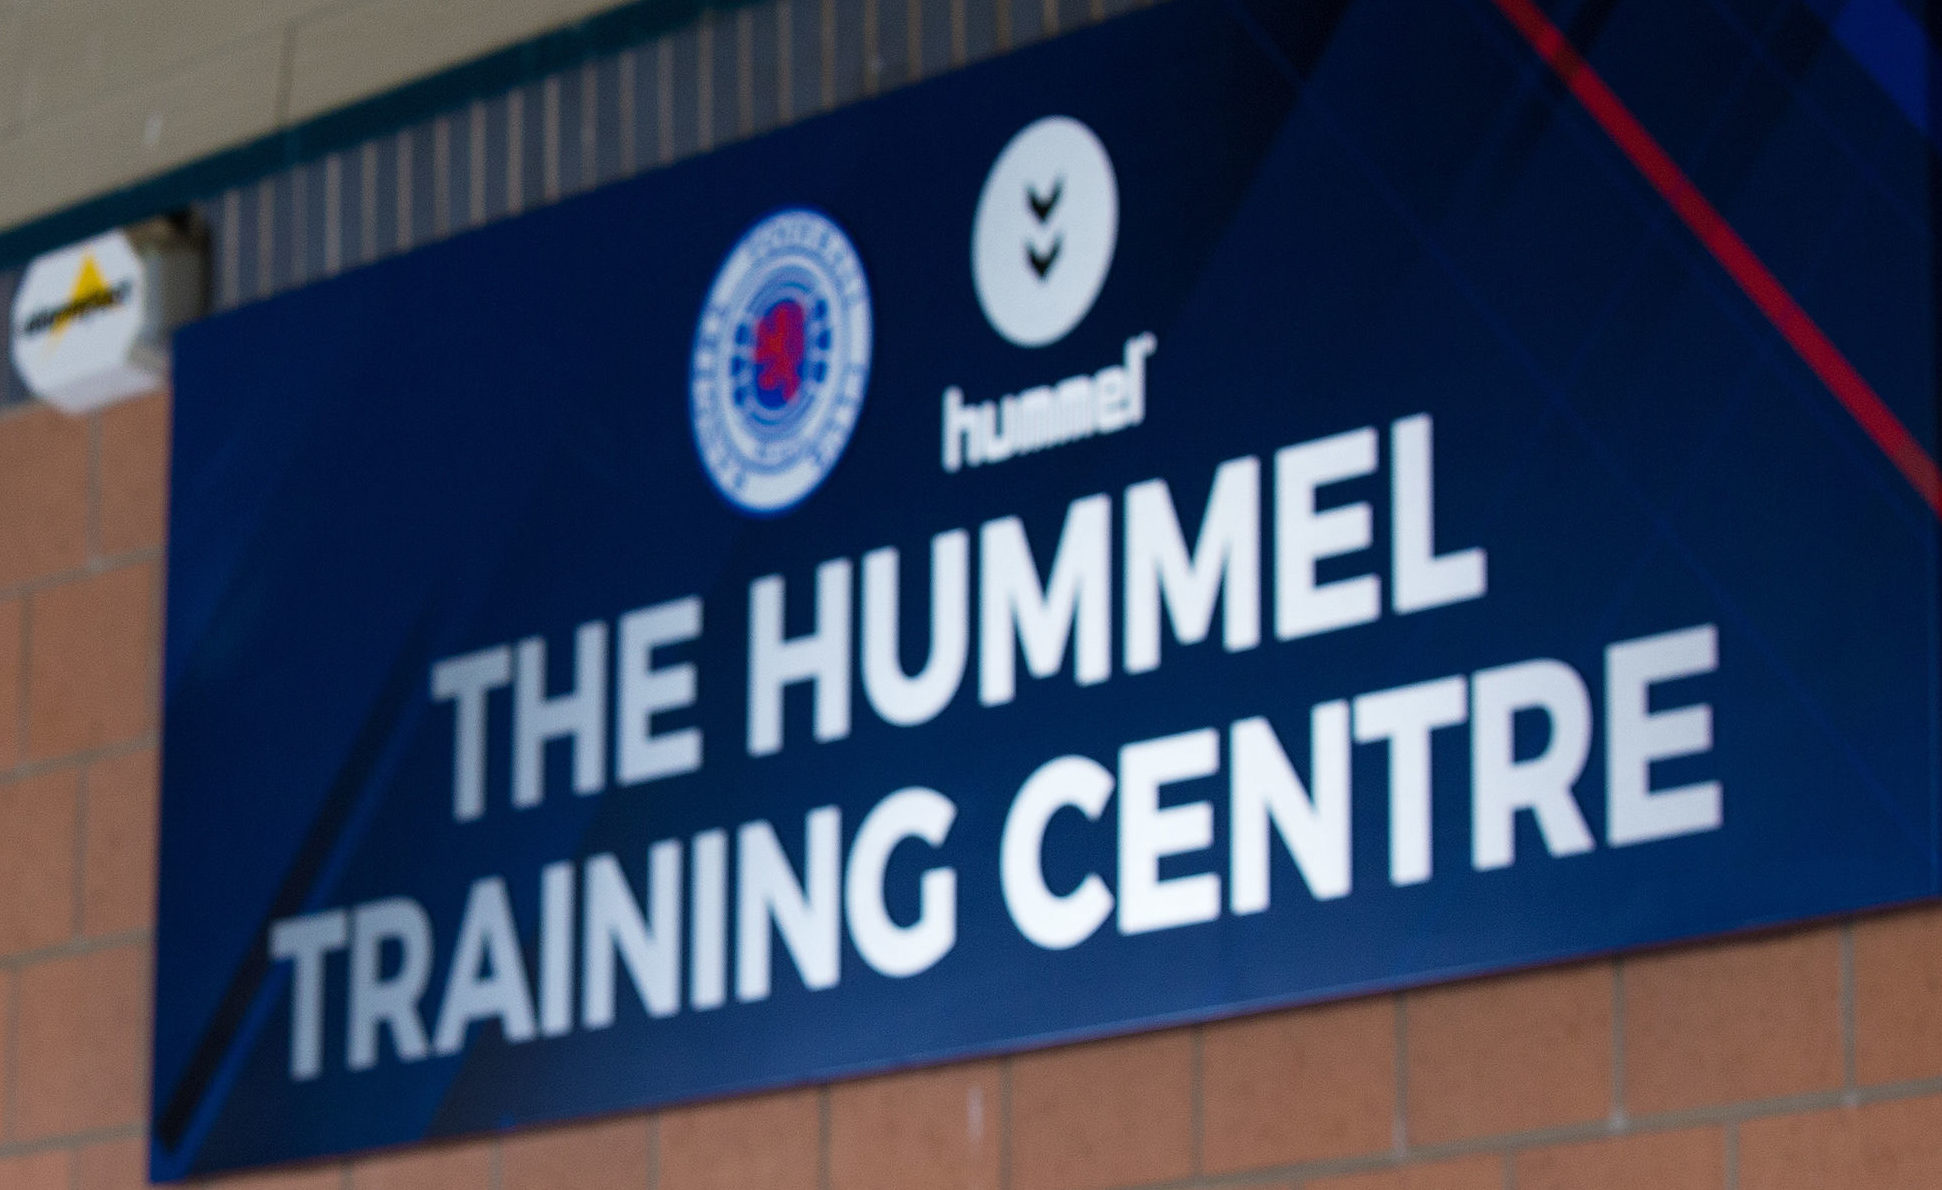 Rangers' training base at Auchenhowie (Kirk O'Rourke/Rangers Football Club/PA Wire)